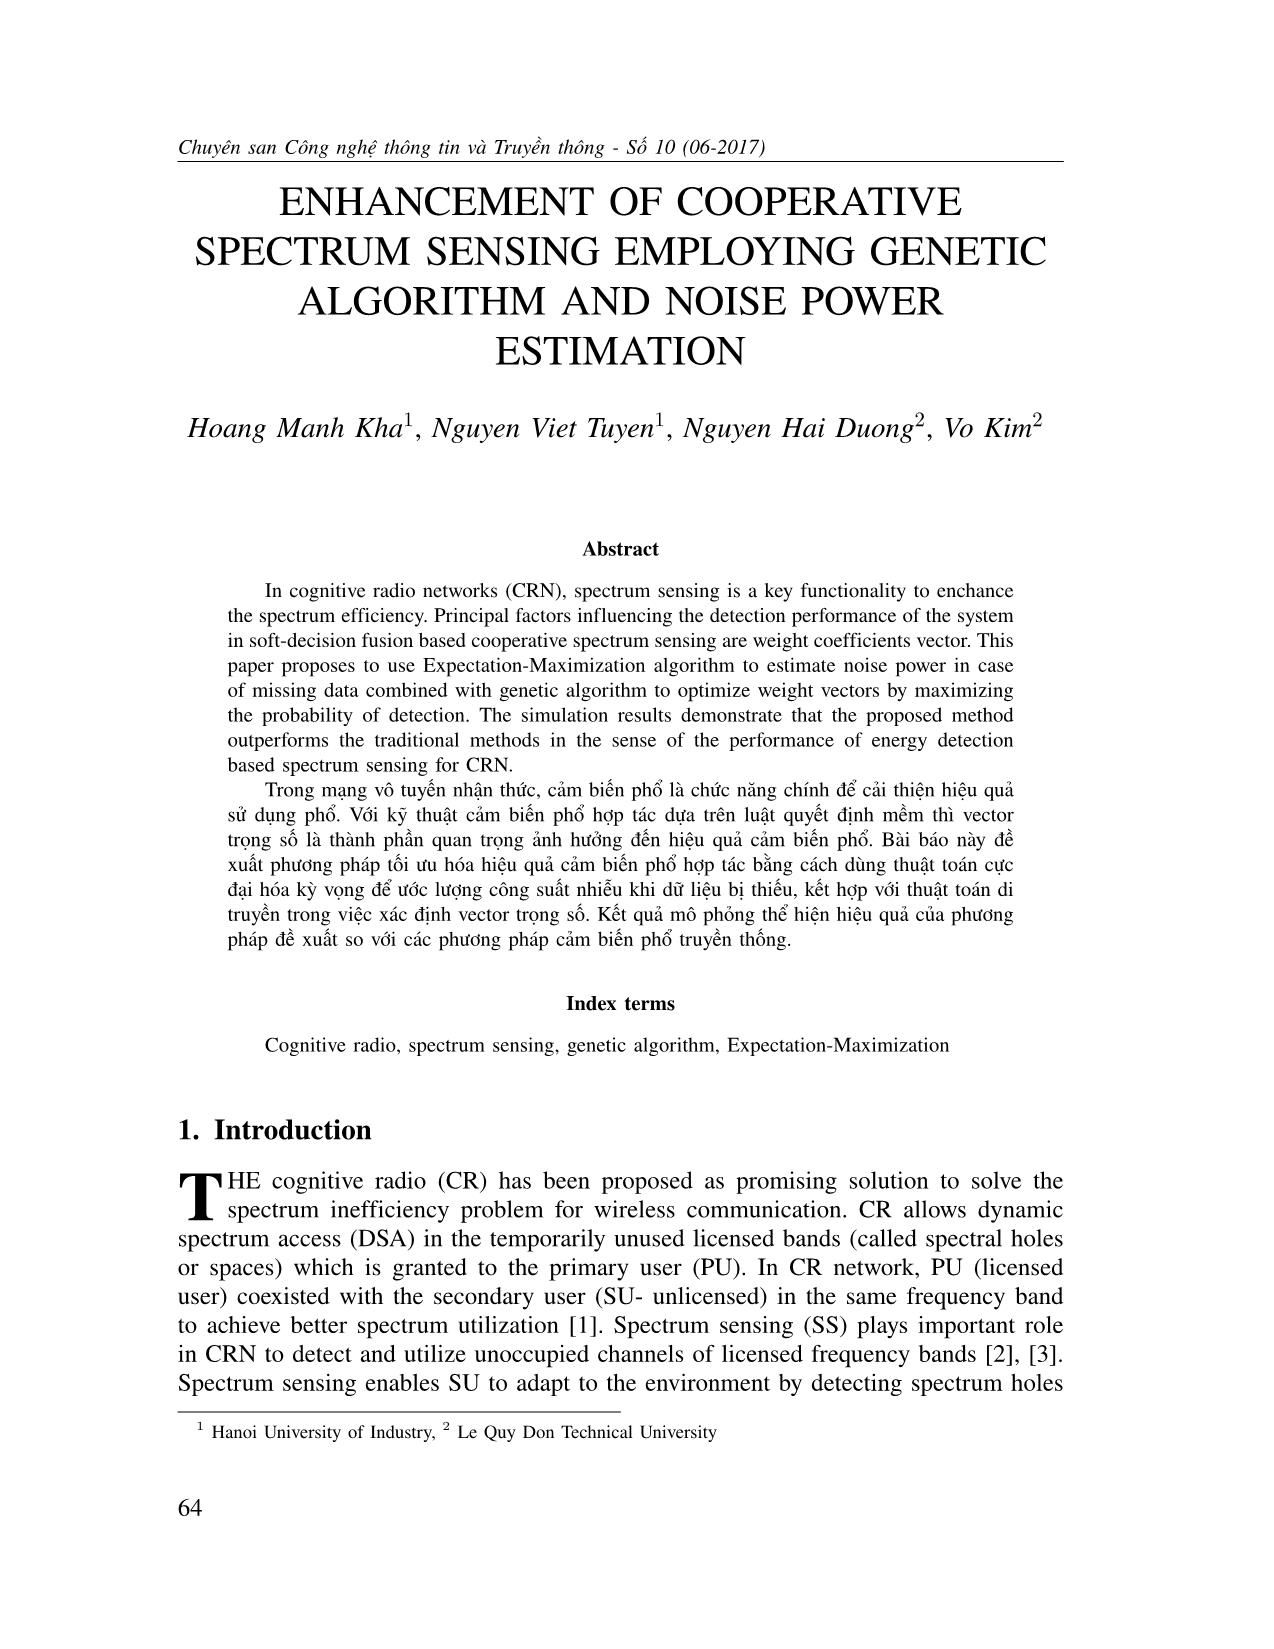 Enhancement of cooperative spectrum sensing employing genetic algorithm and noise power estimation trang 1